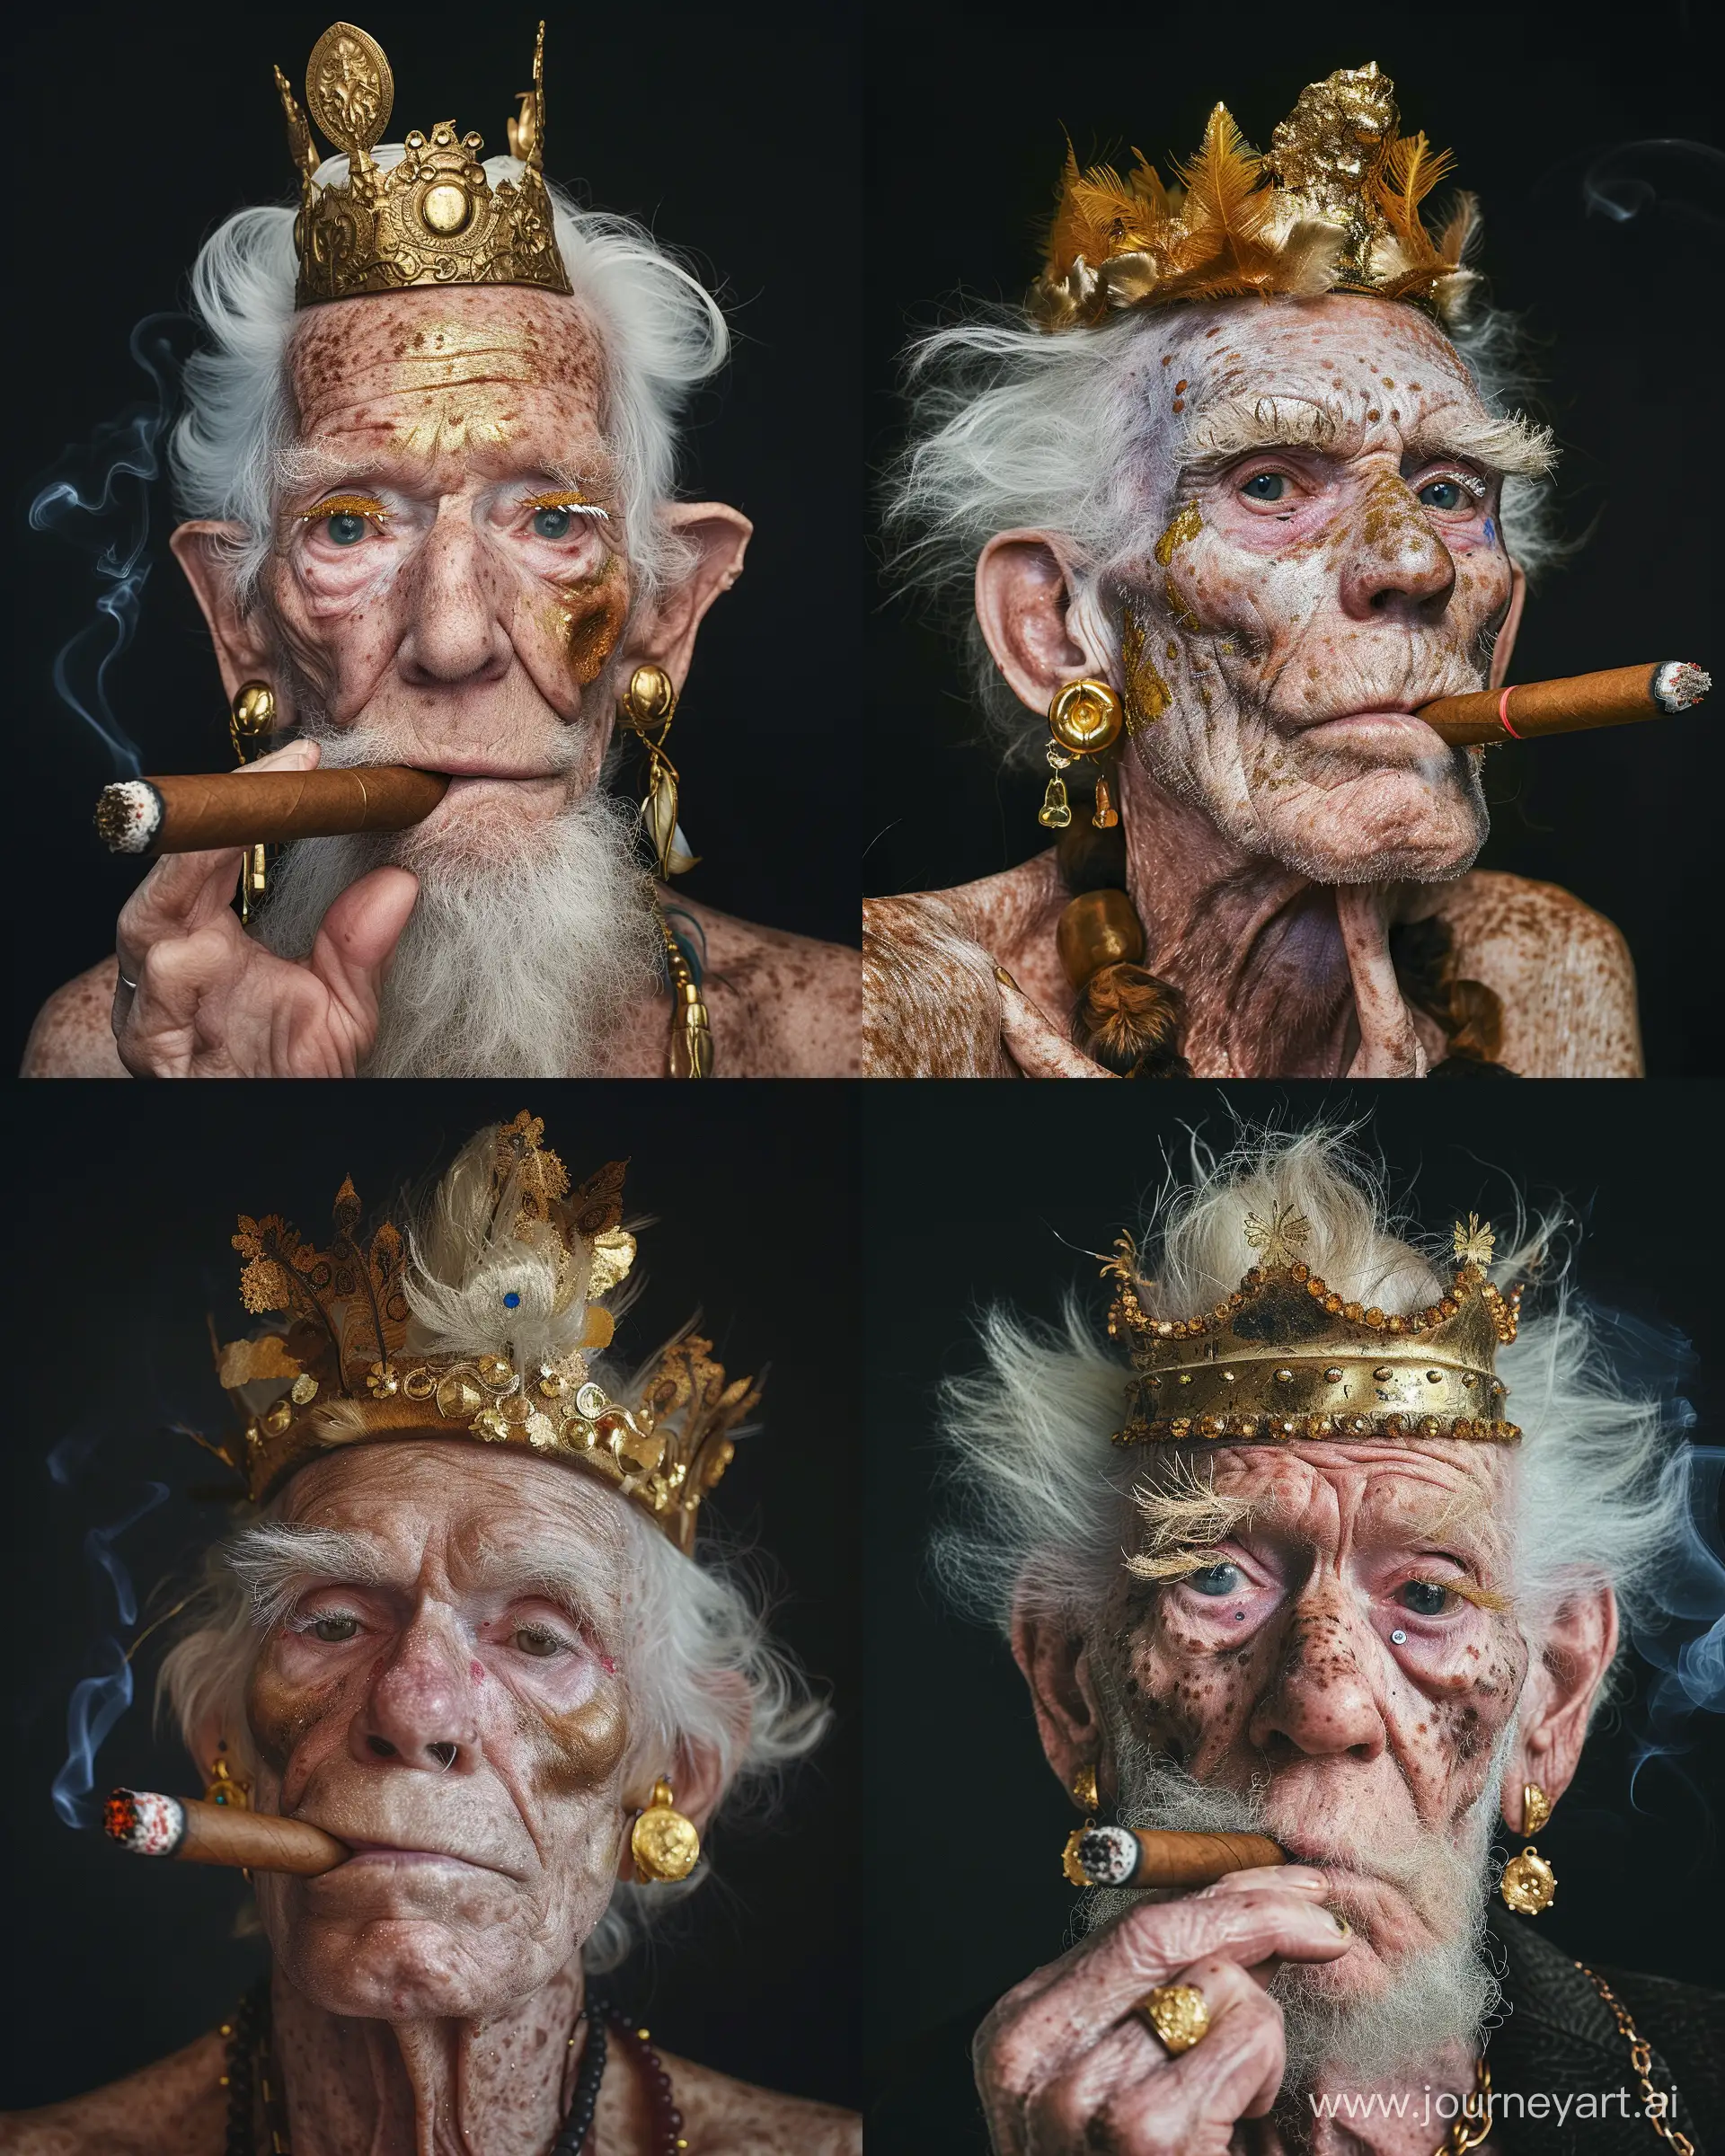 Eccentric-Elder-in-Golden-Crown-Striking-Portrait-of-an-Aged-Dandy-with-Wildlife-Aesthetic